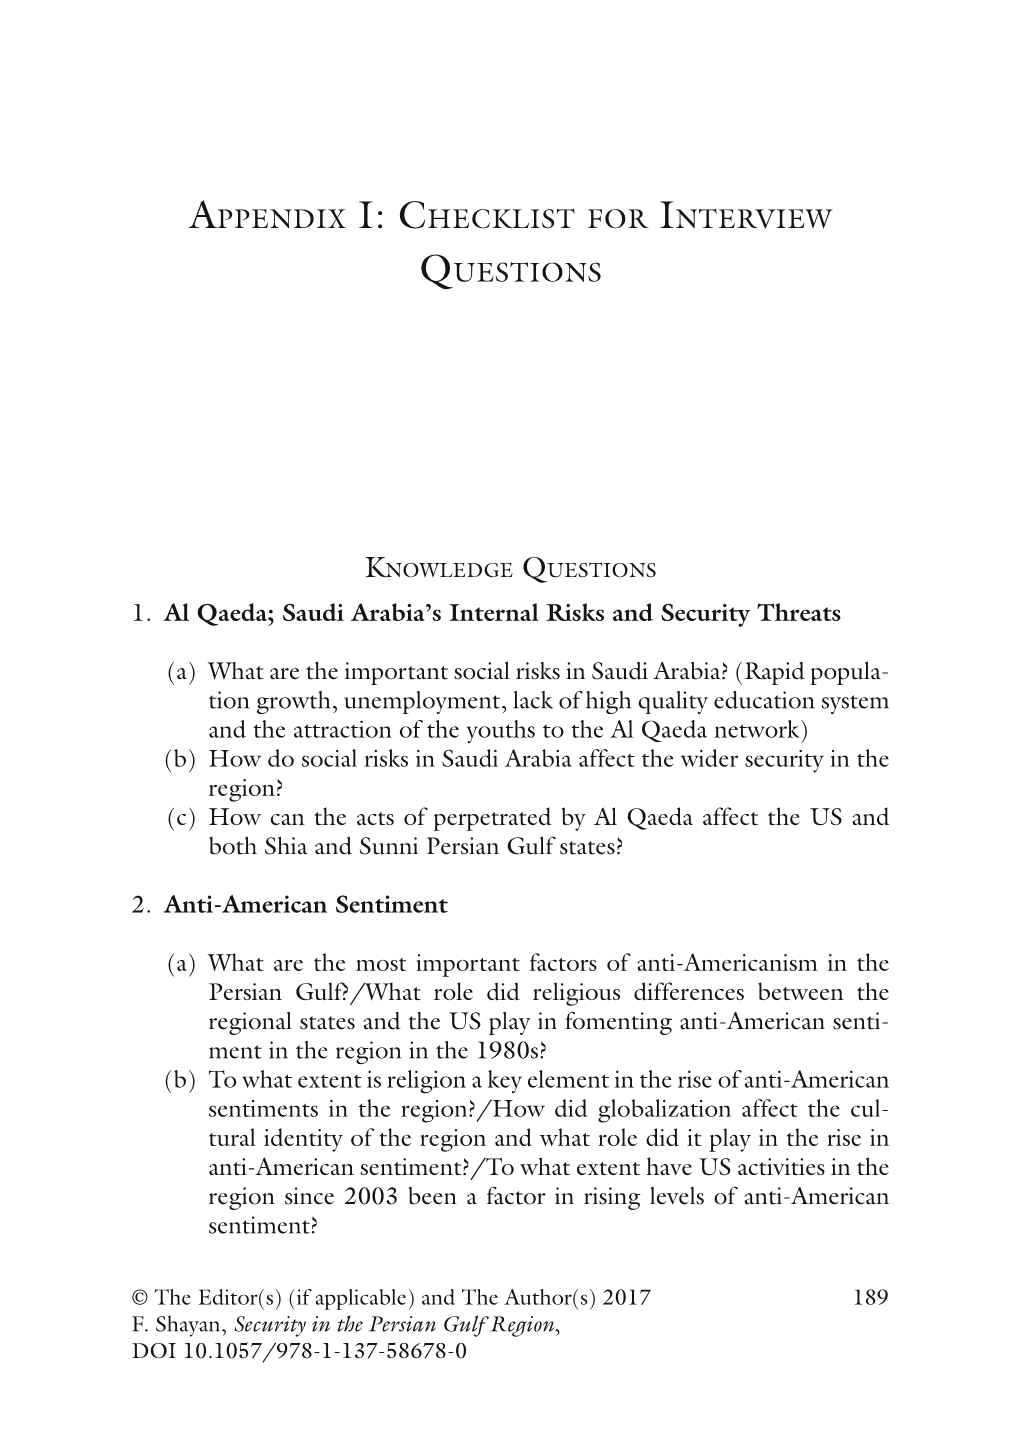 Appendix I: Checklist for Interview Questions